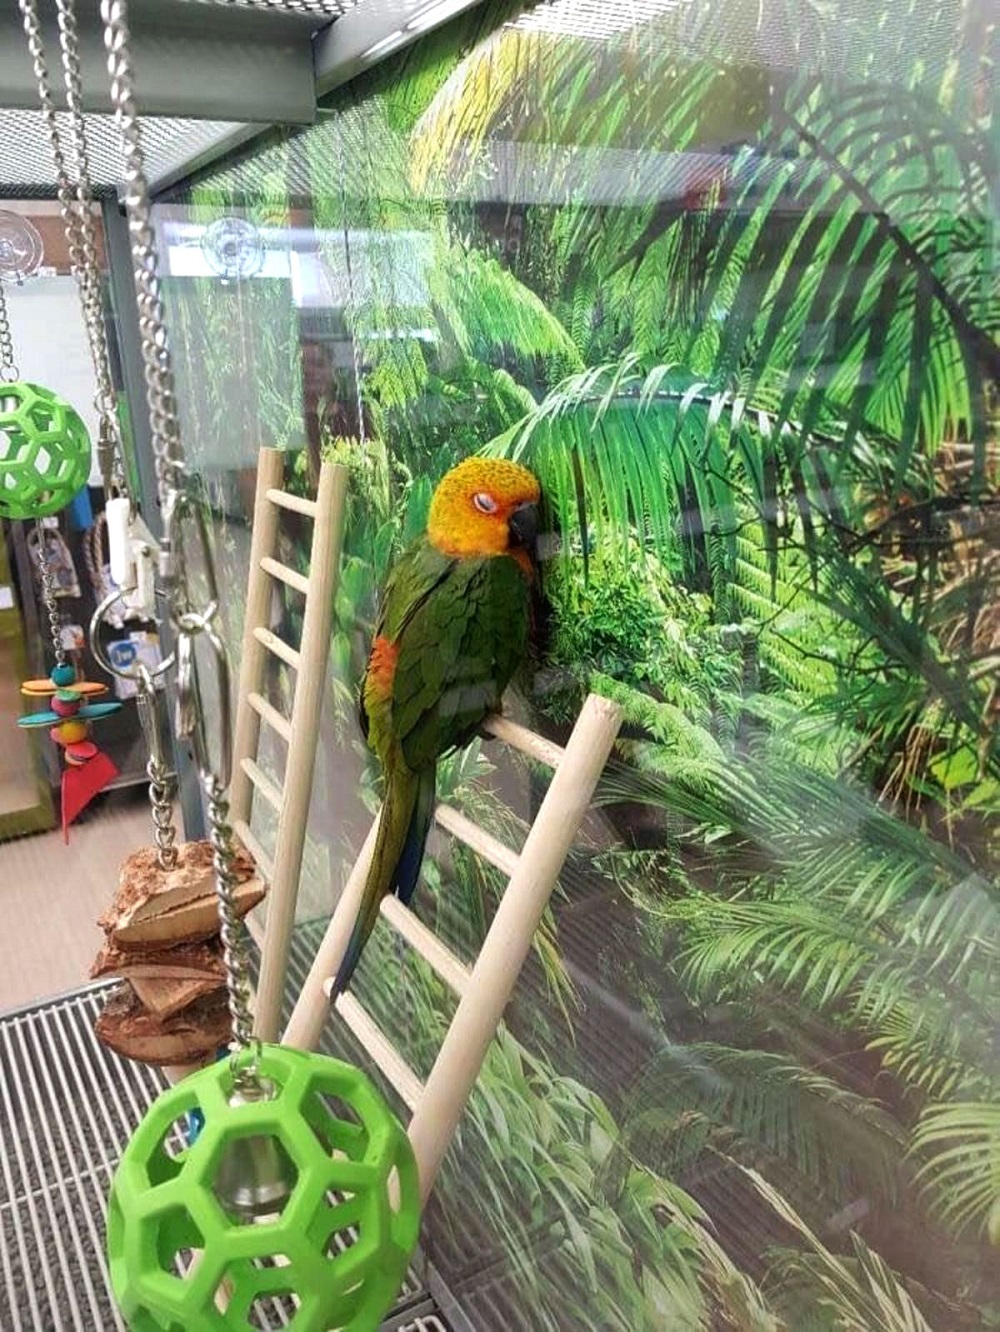 Papuga tęskni za domem